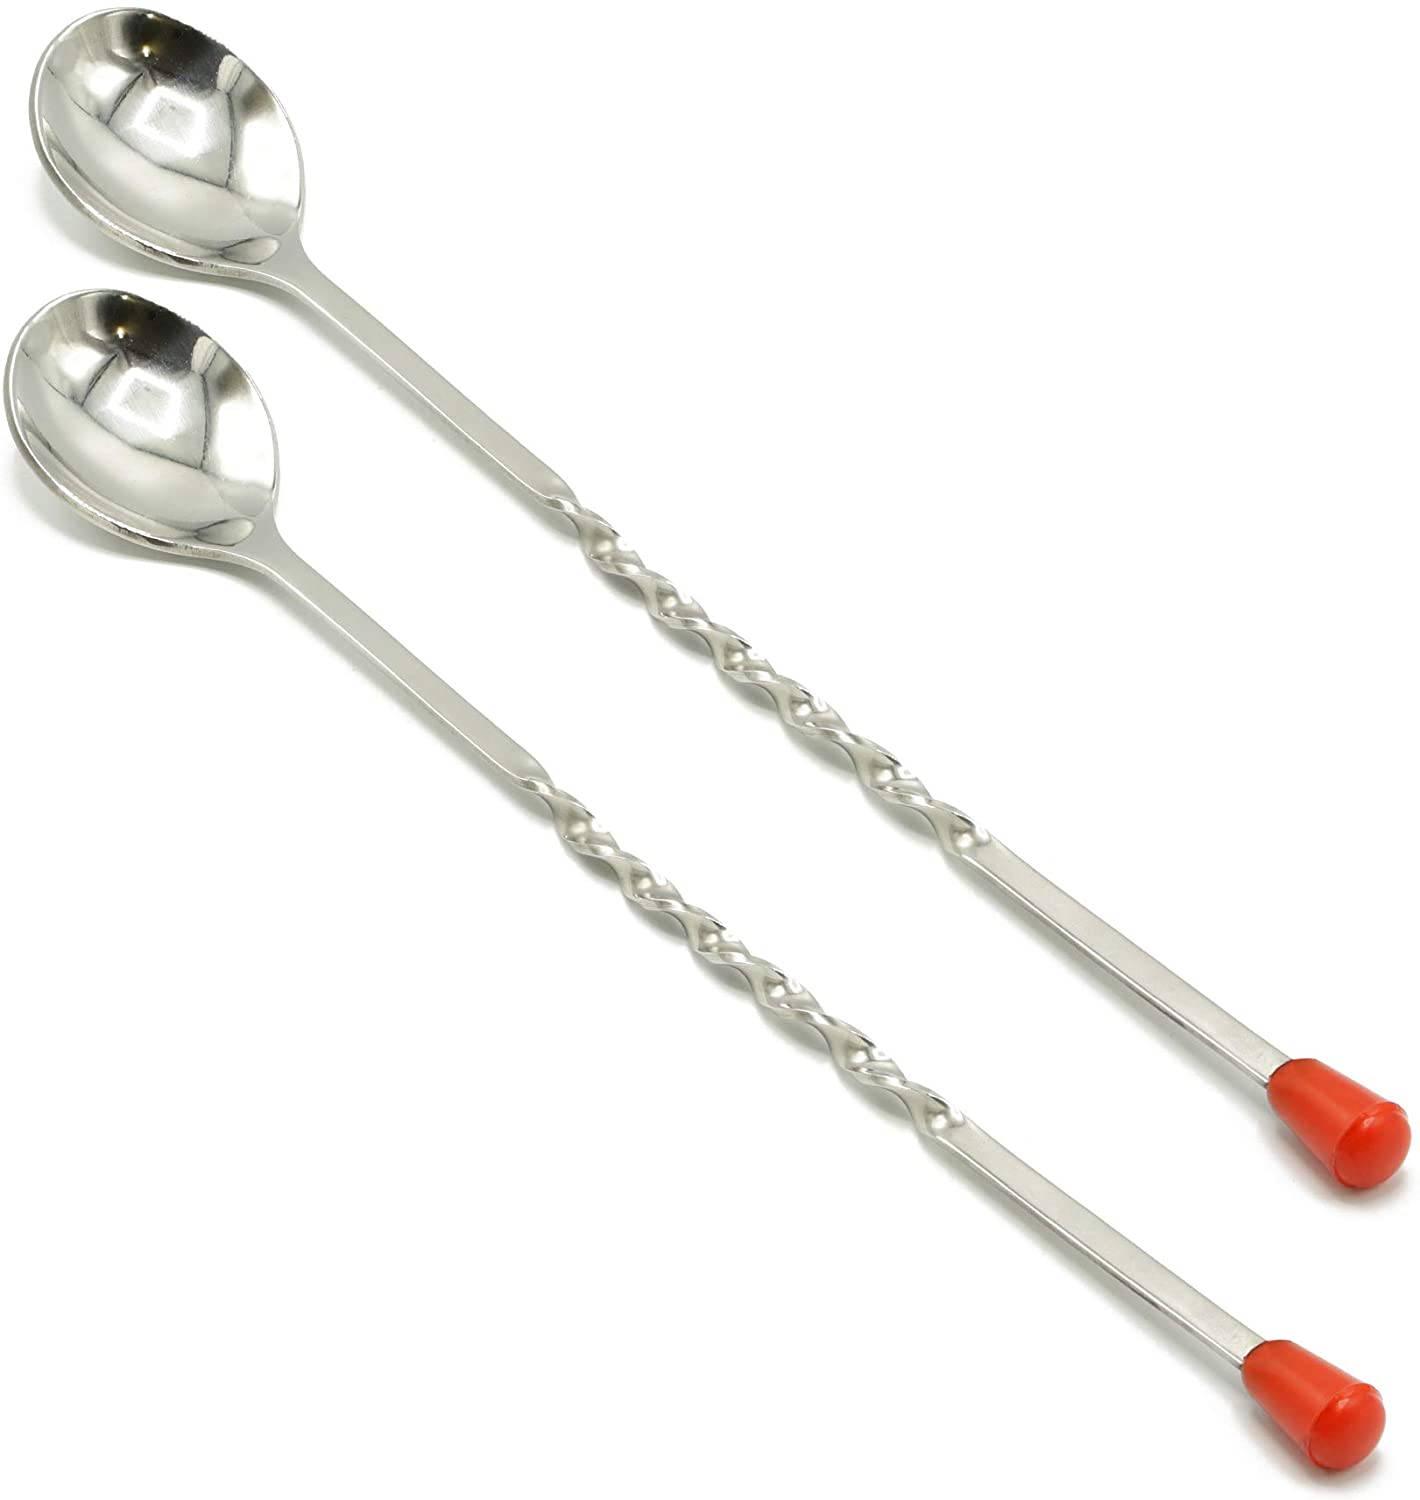 Mixing Spoons Set